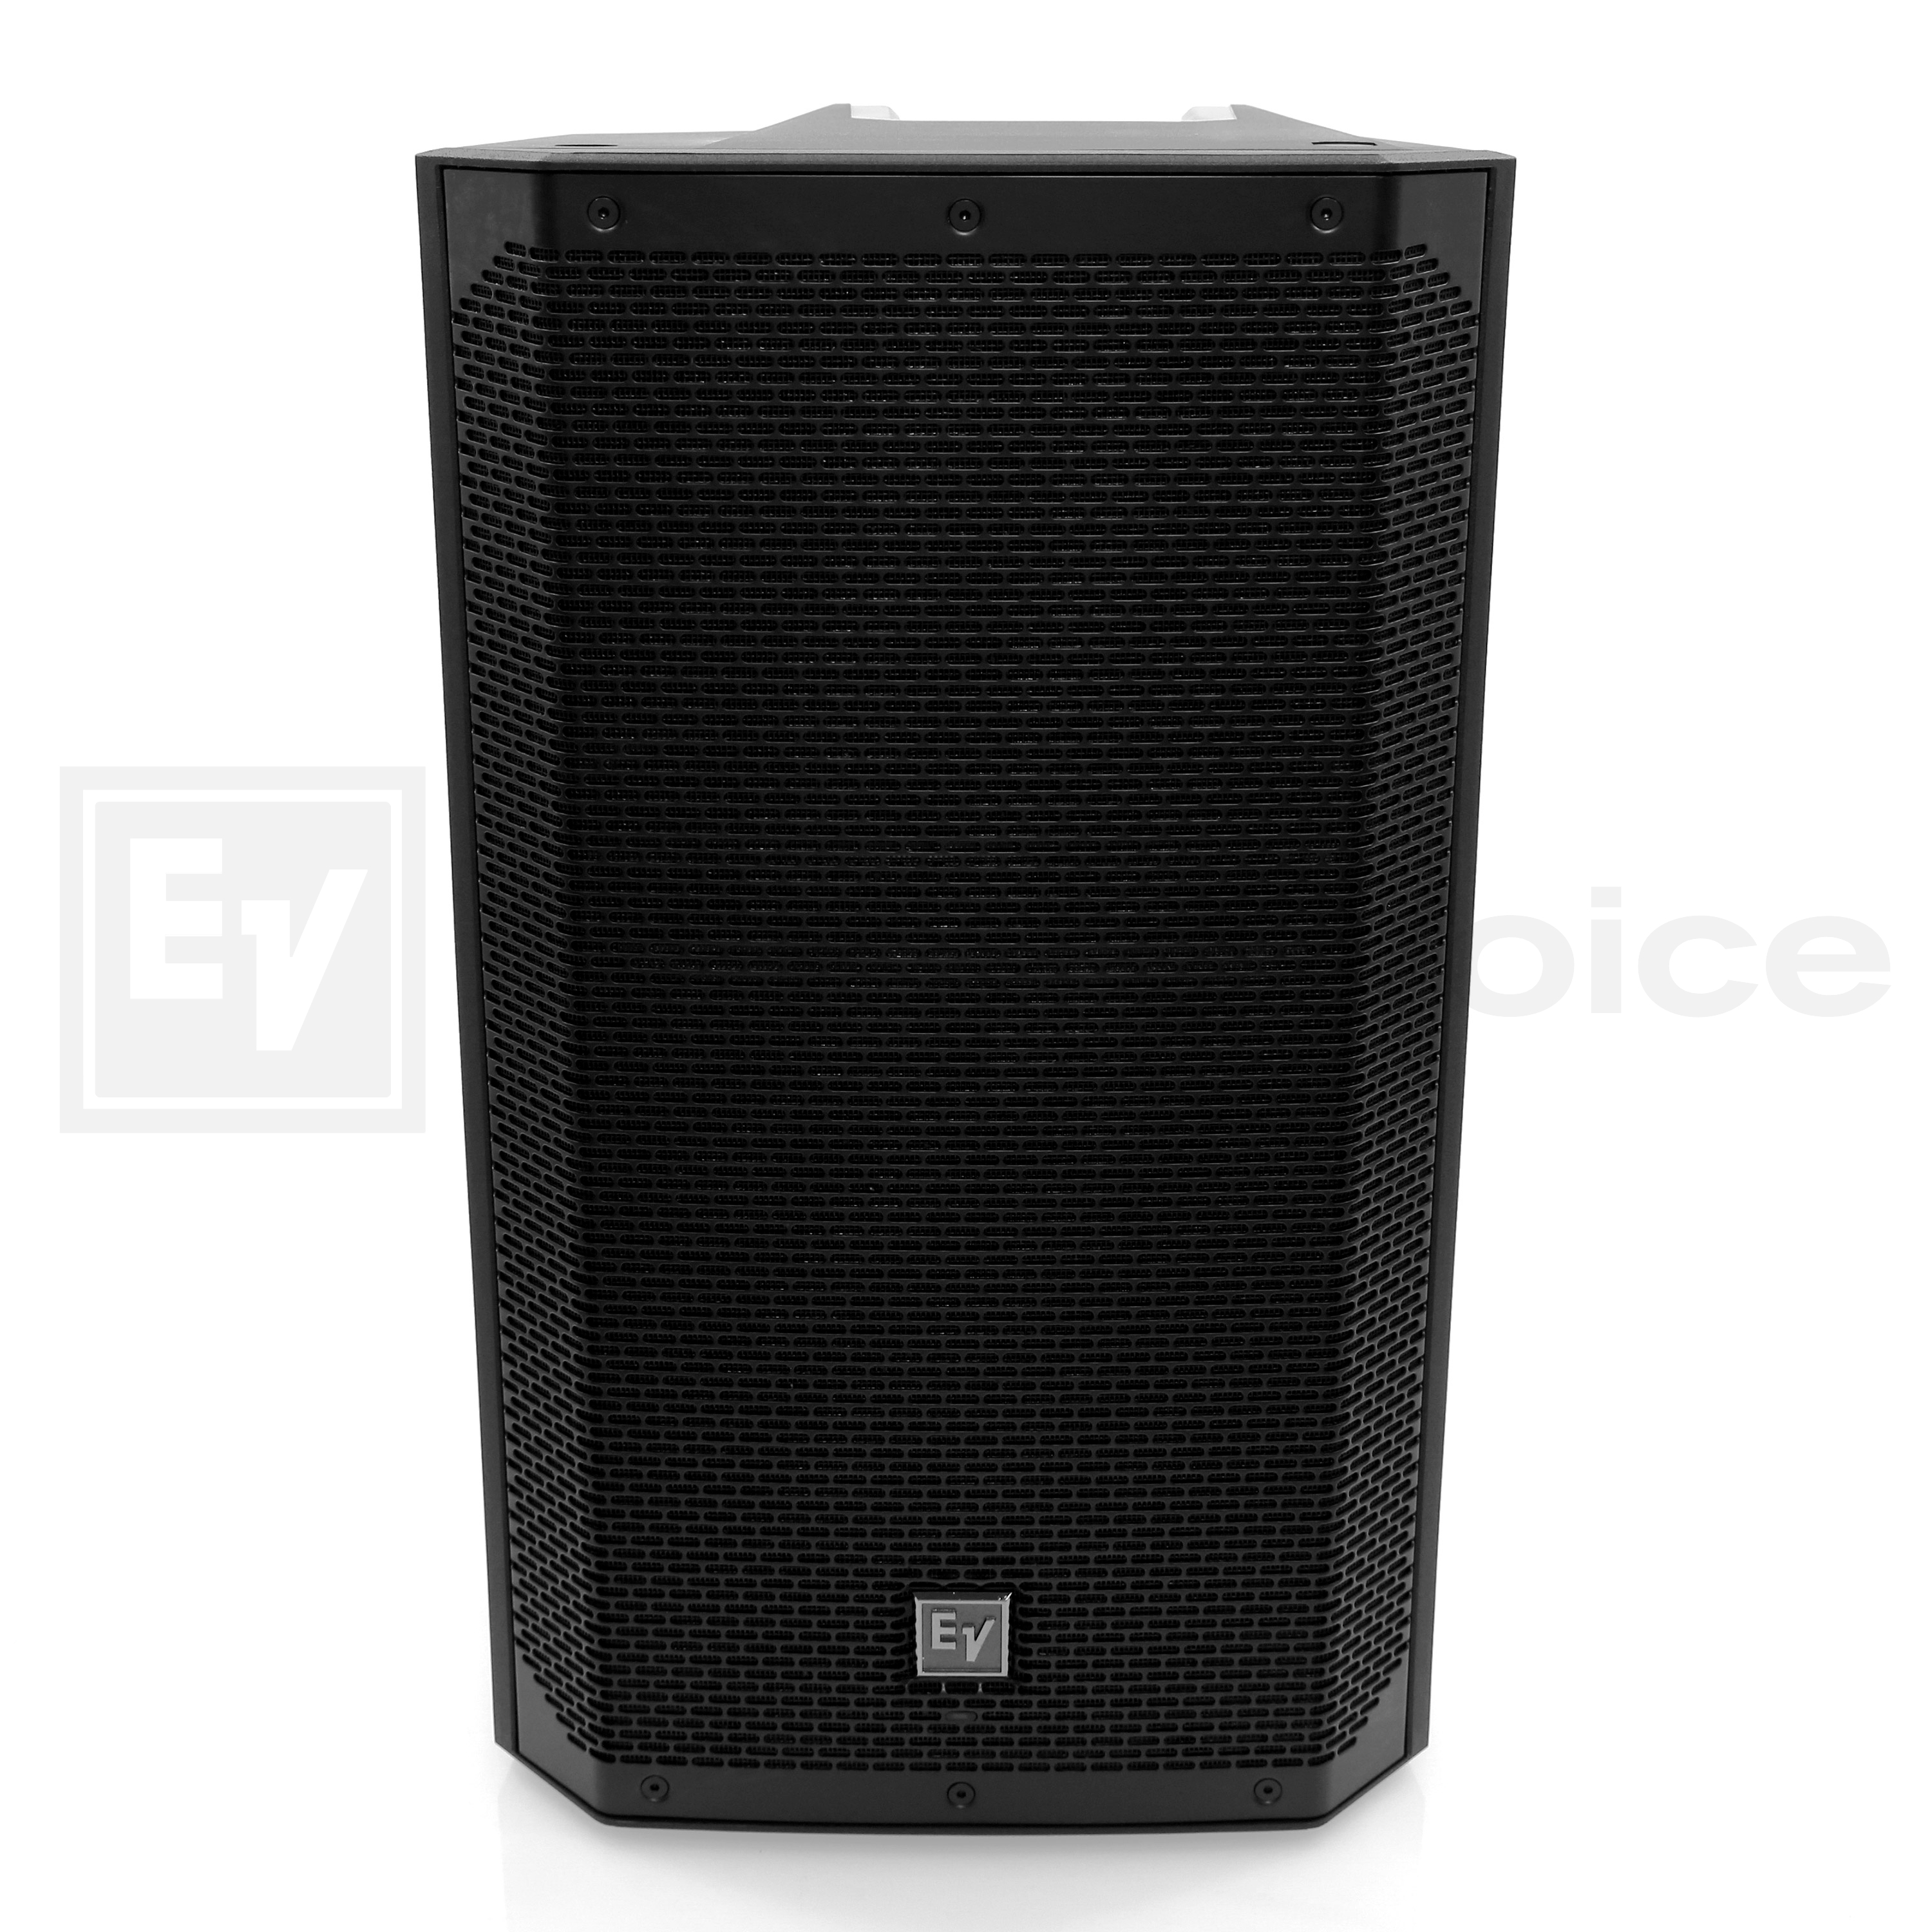 ELX200-12P Electro-Voice